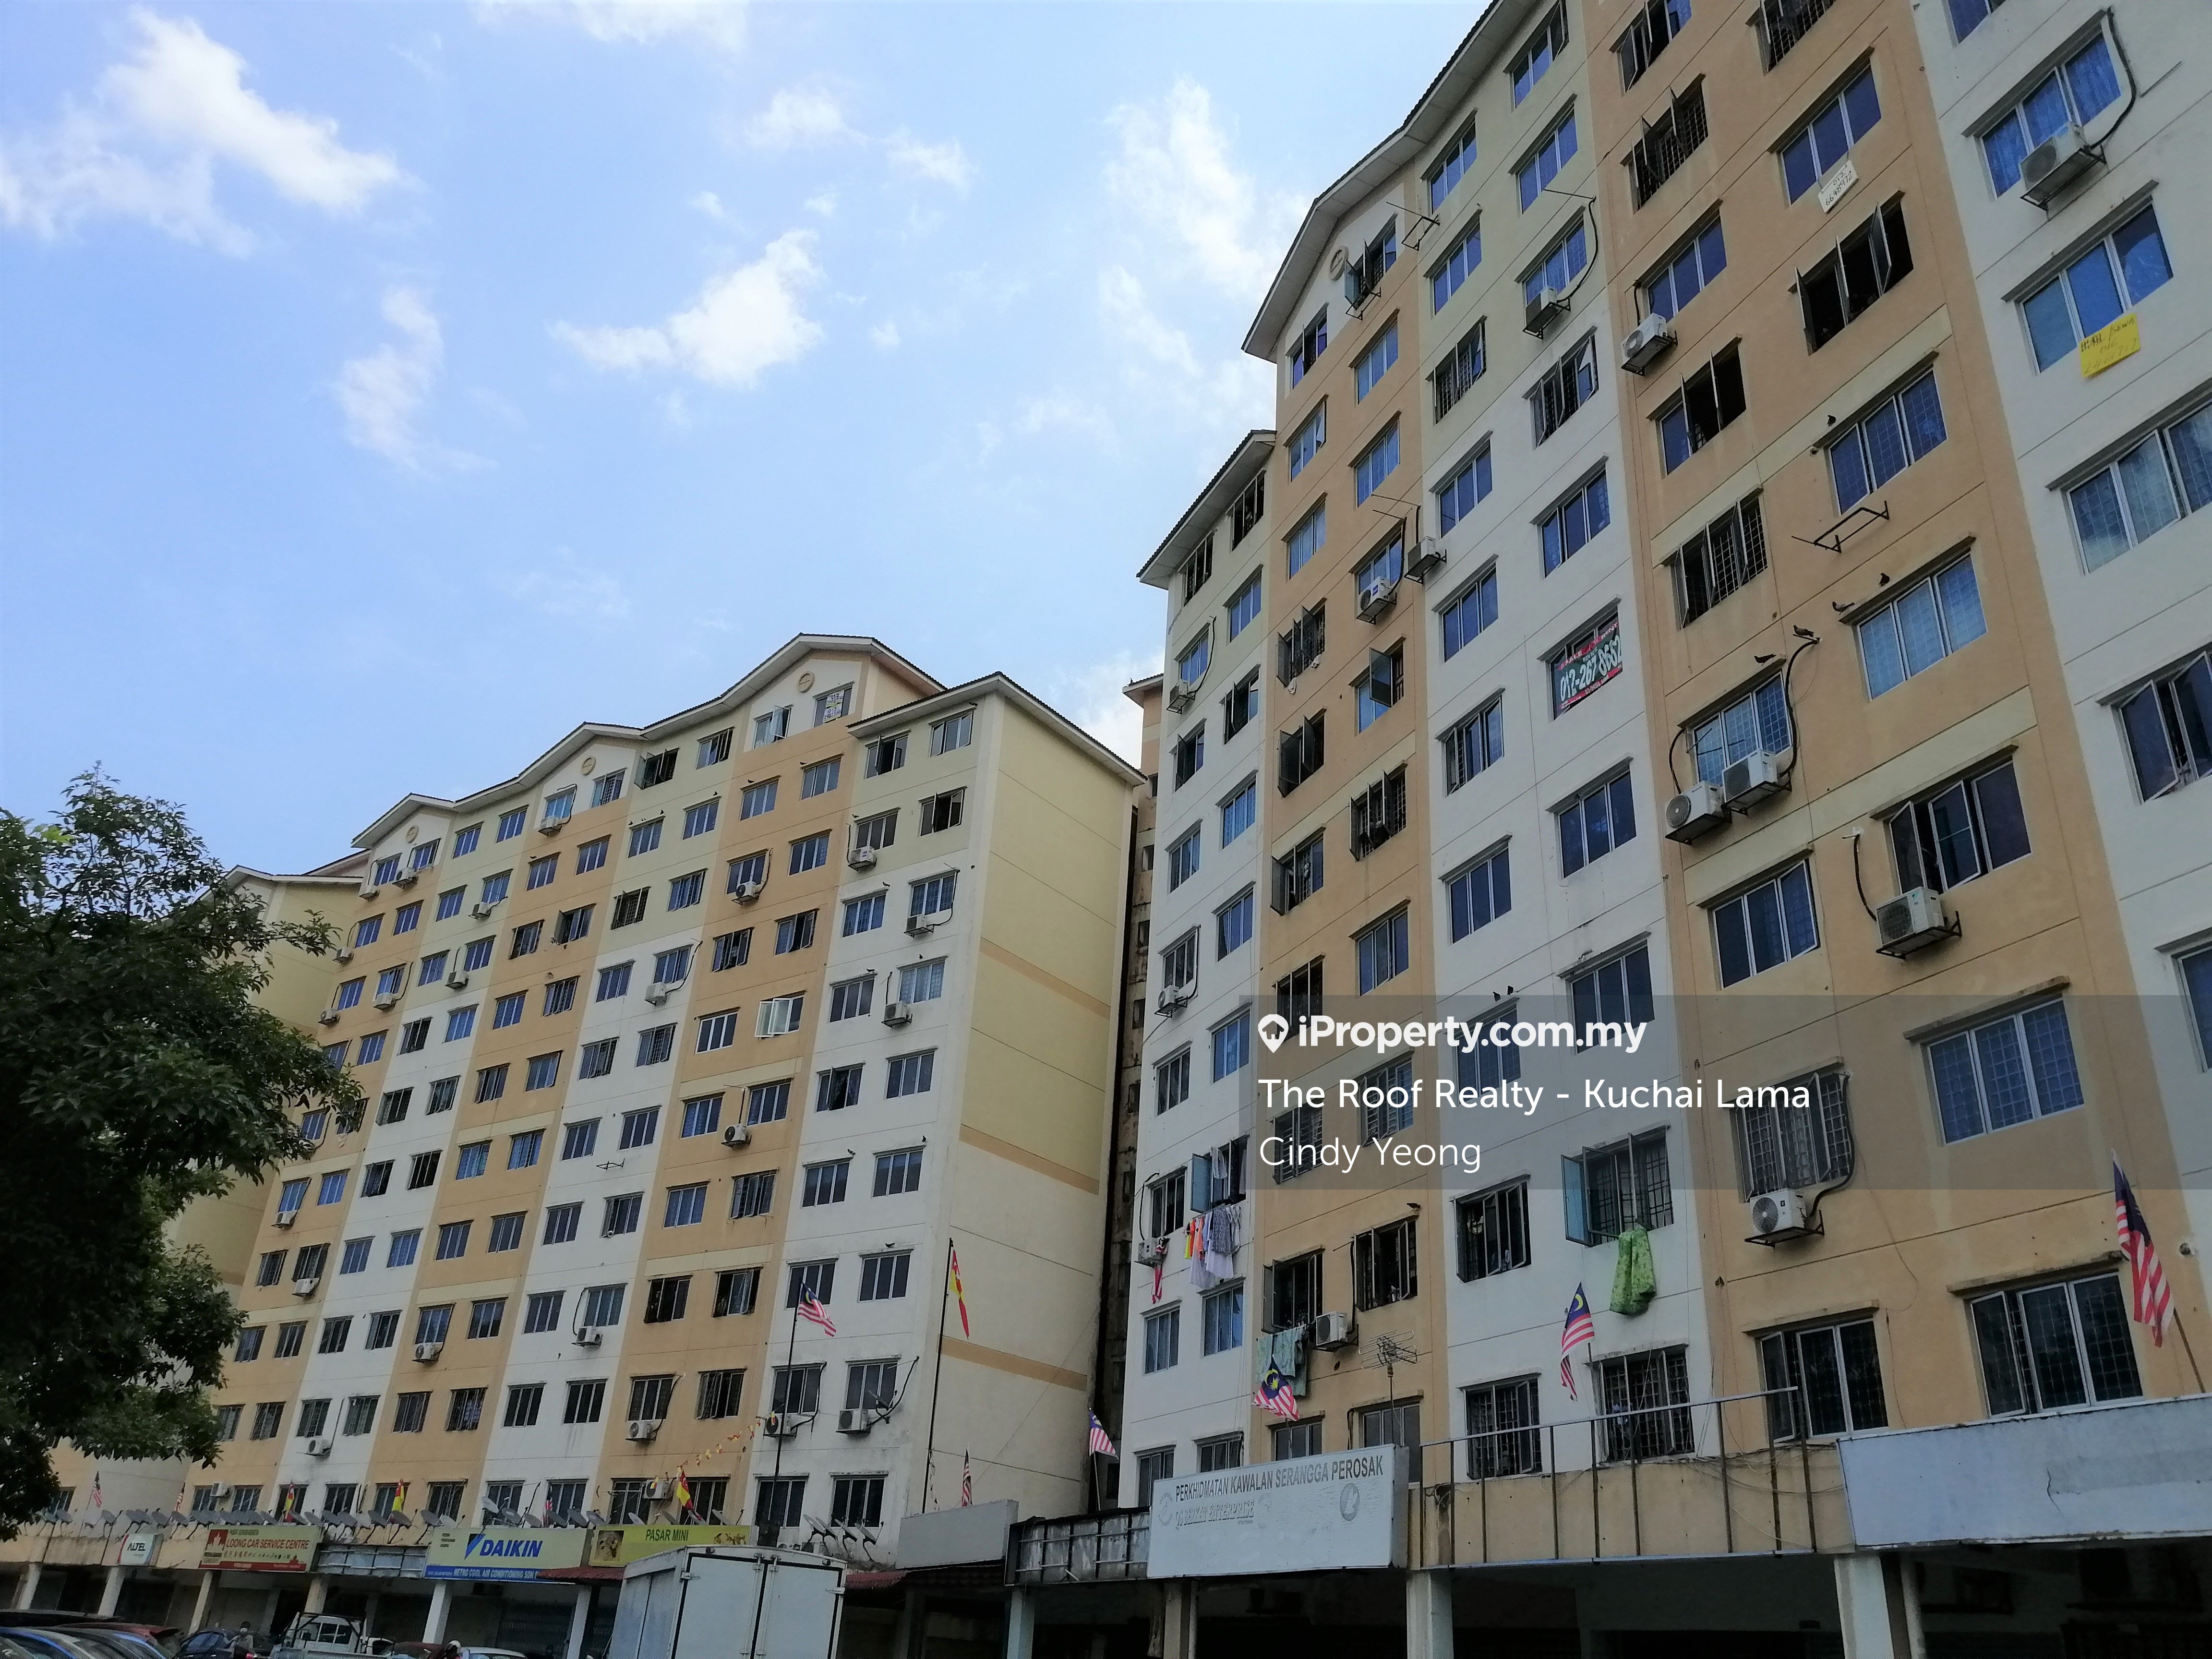 Cemara Intermediate Flat 3 Bedrooms For Sale In Cheras Selangor Iproperty Com My